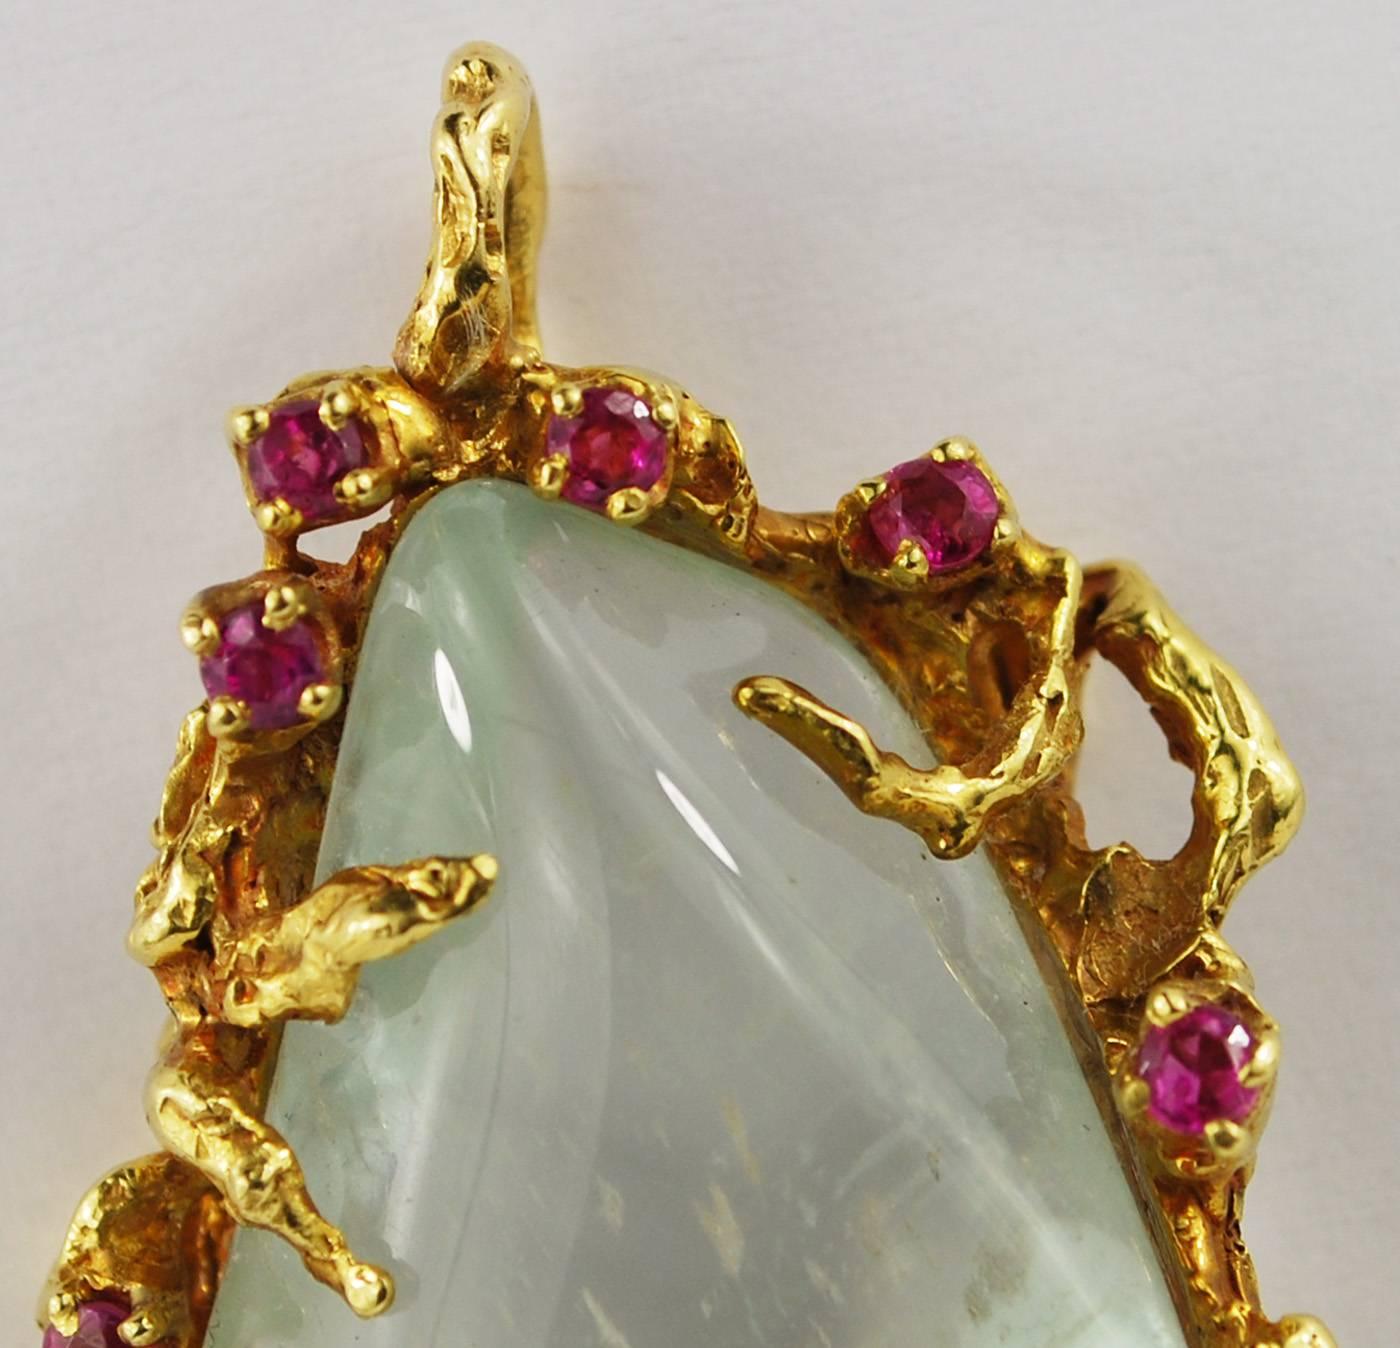 arthur king jewelry designer